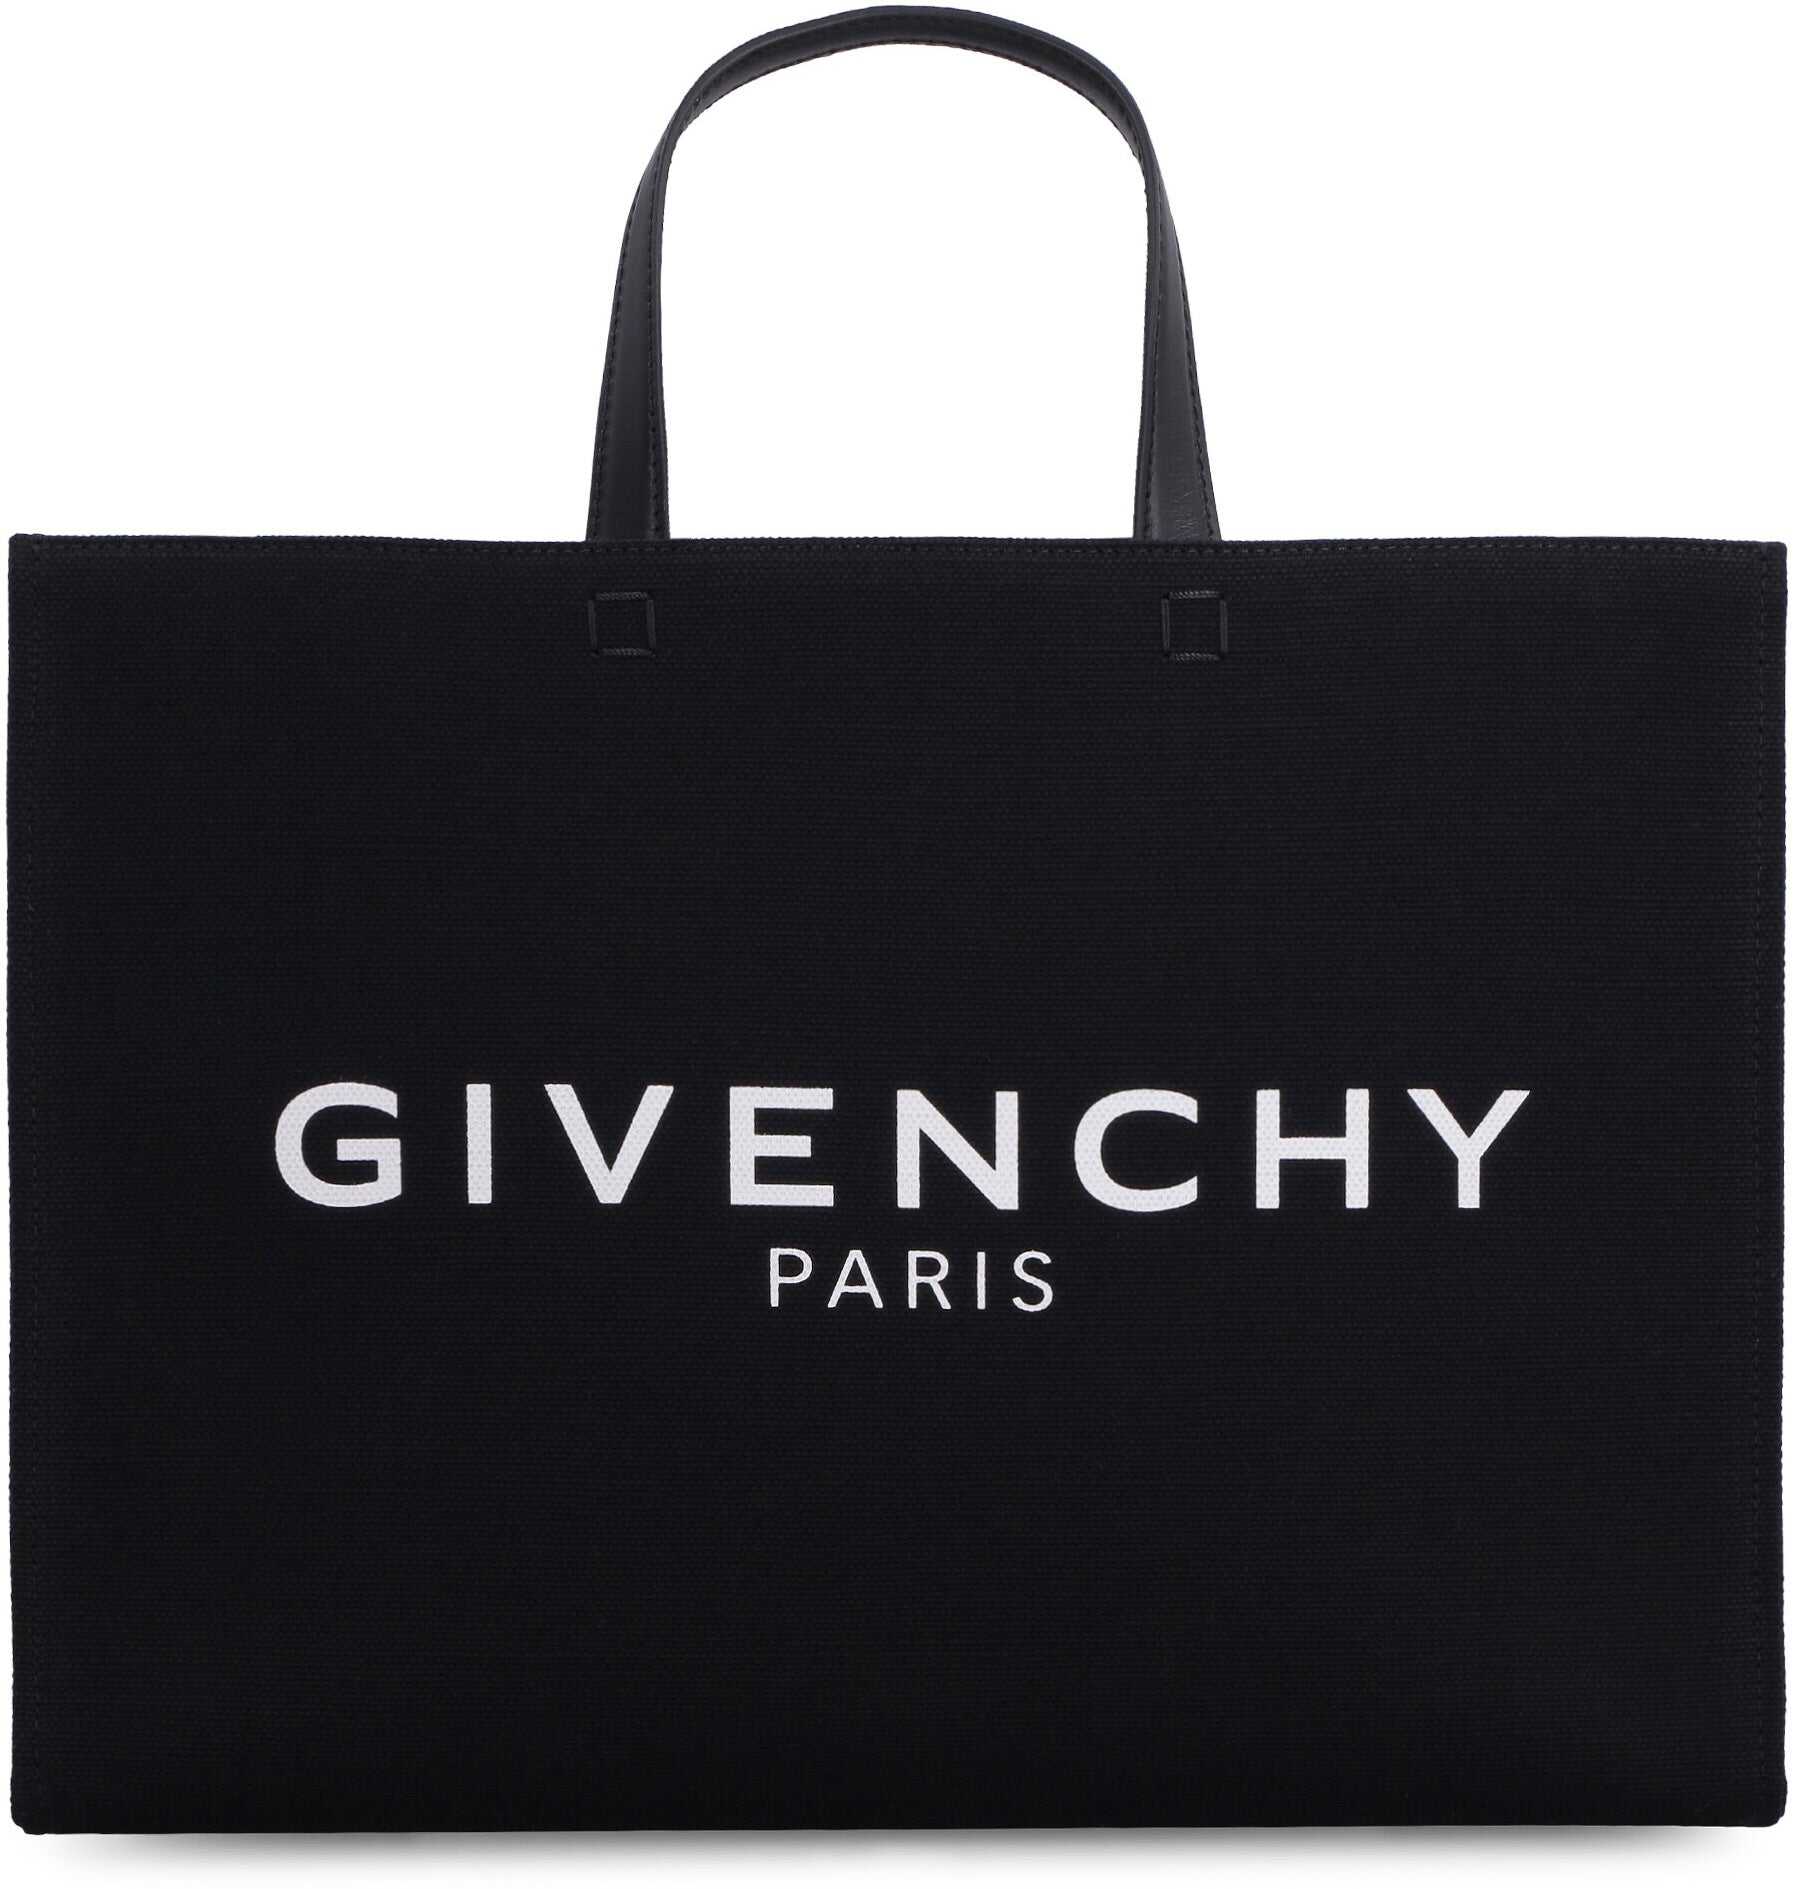 Givenchy GIVENCHY TOTE MEDIUM G BAG IN CANVAS BLACK